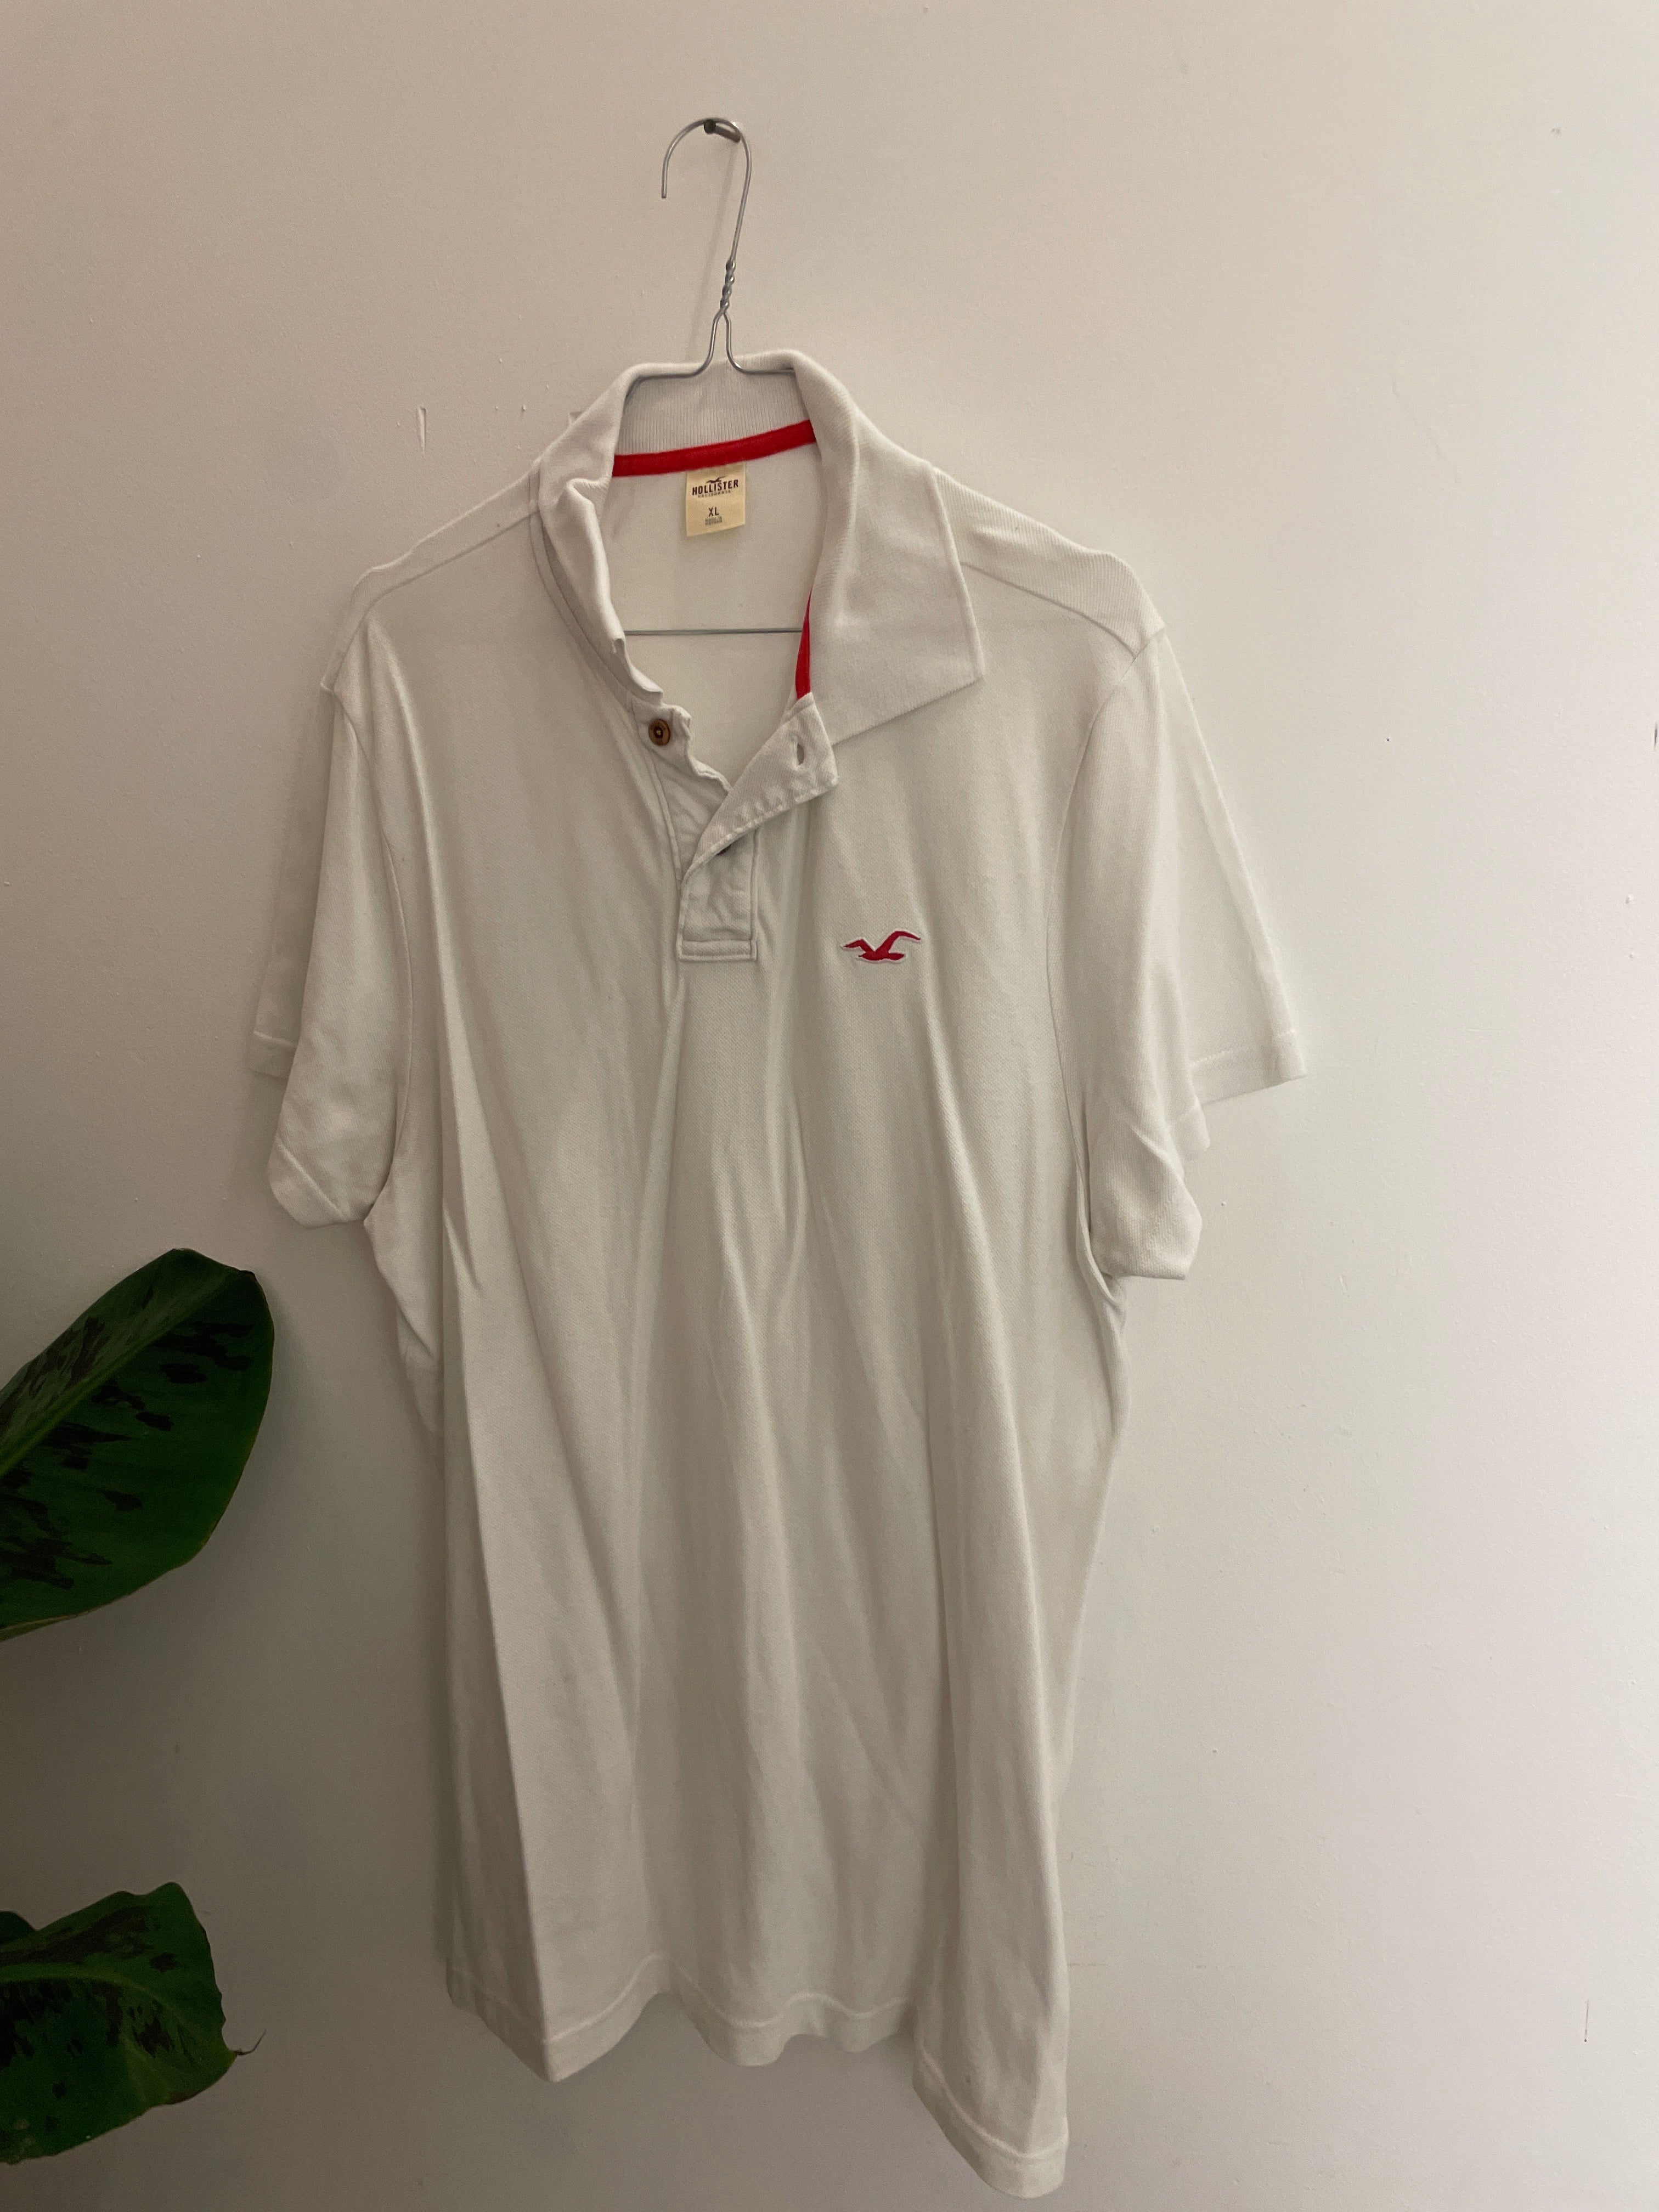 Vintage hollister white mens polo shirt size XL